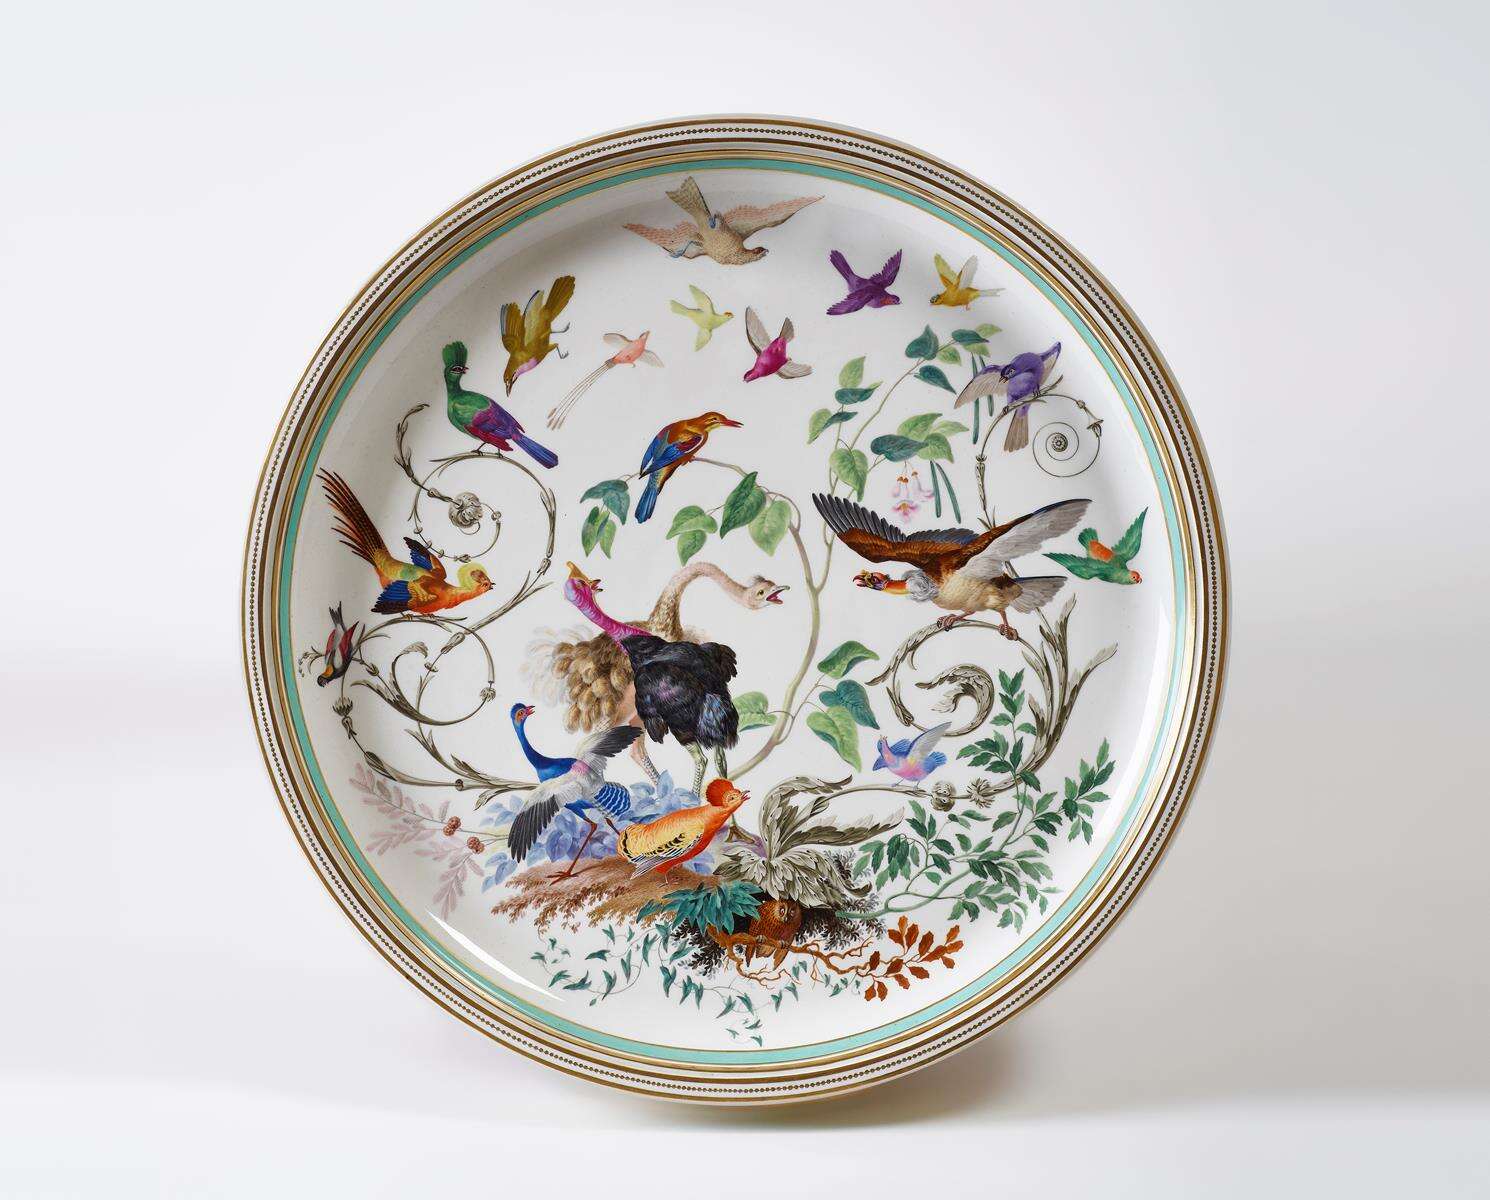 beiny vienna porcelain table top at masterpiece london art fair